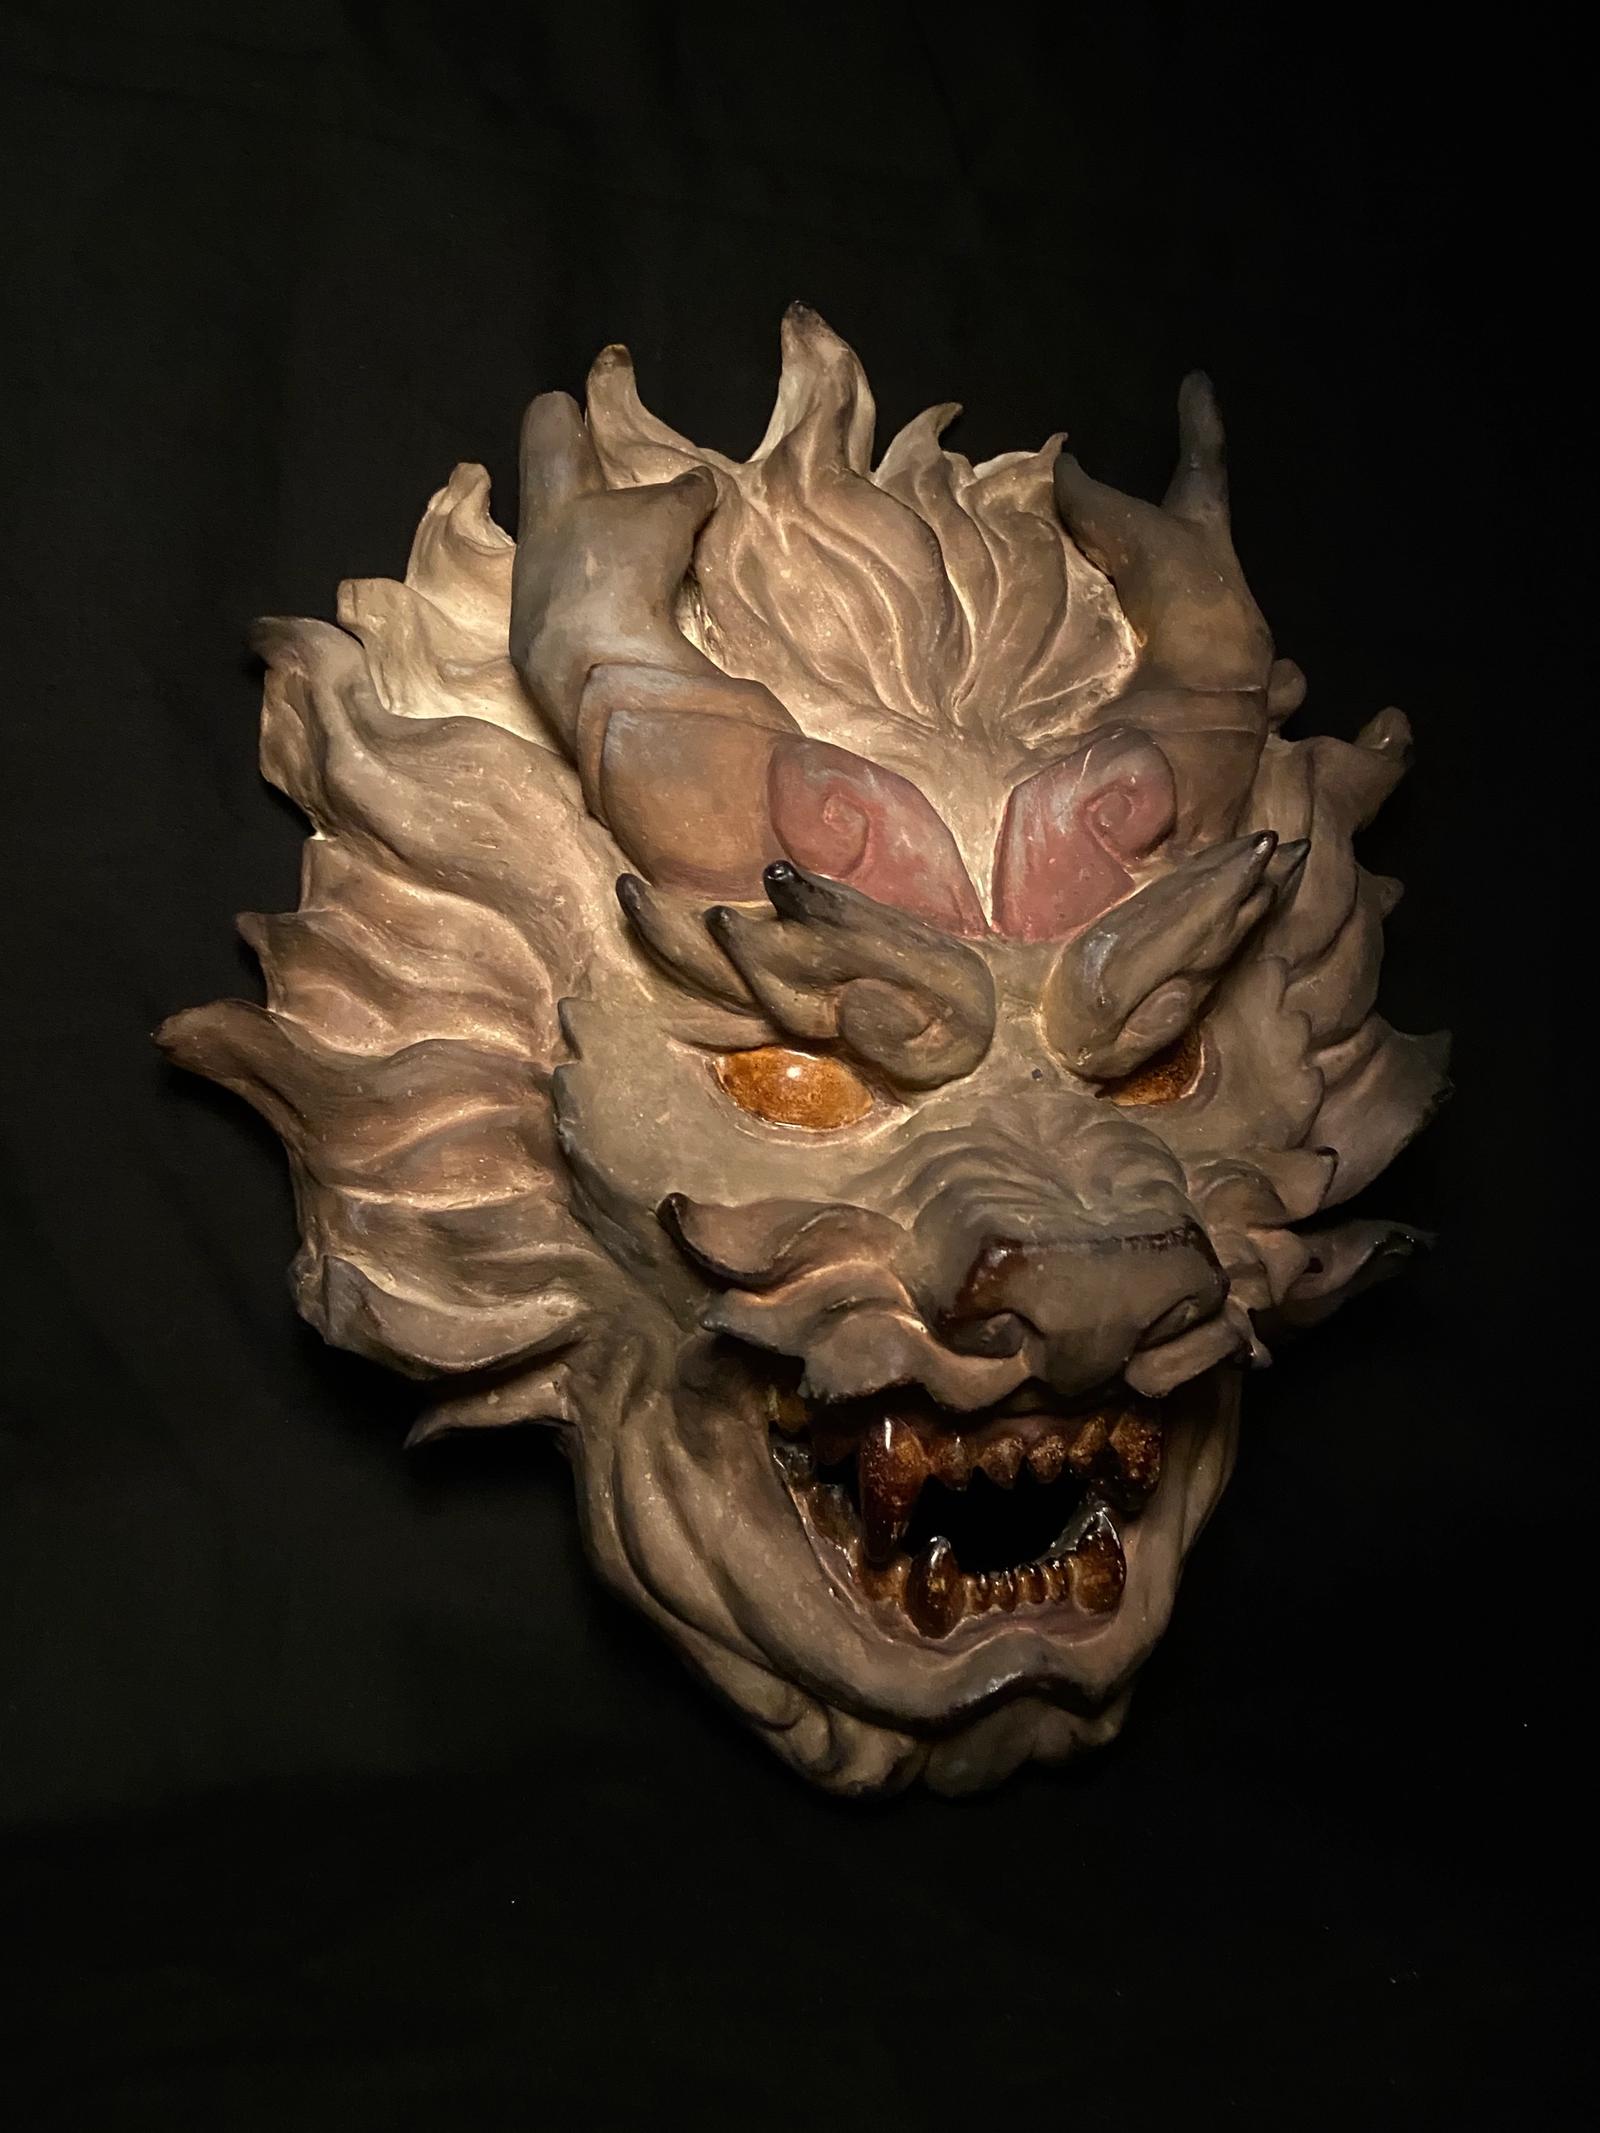 Dragon mask